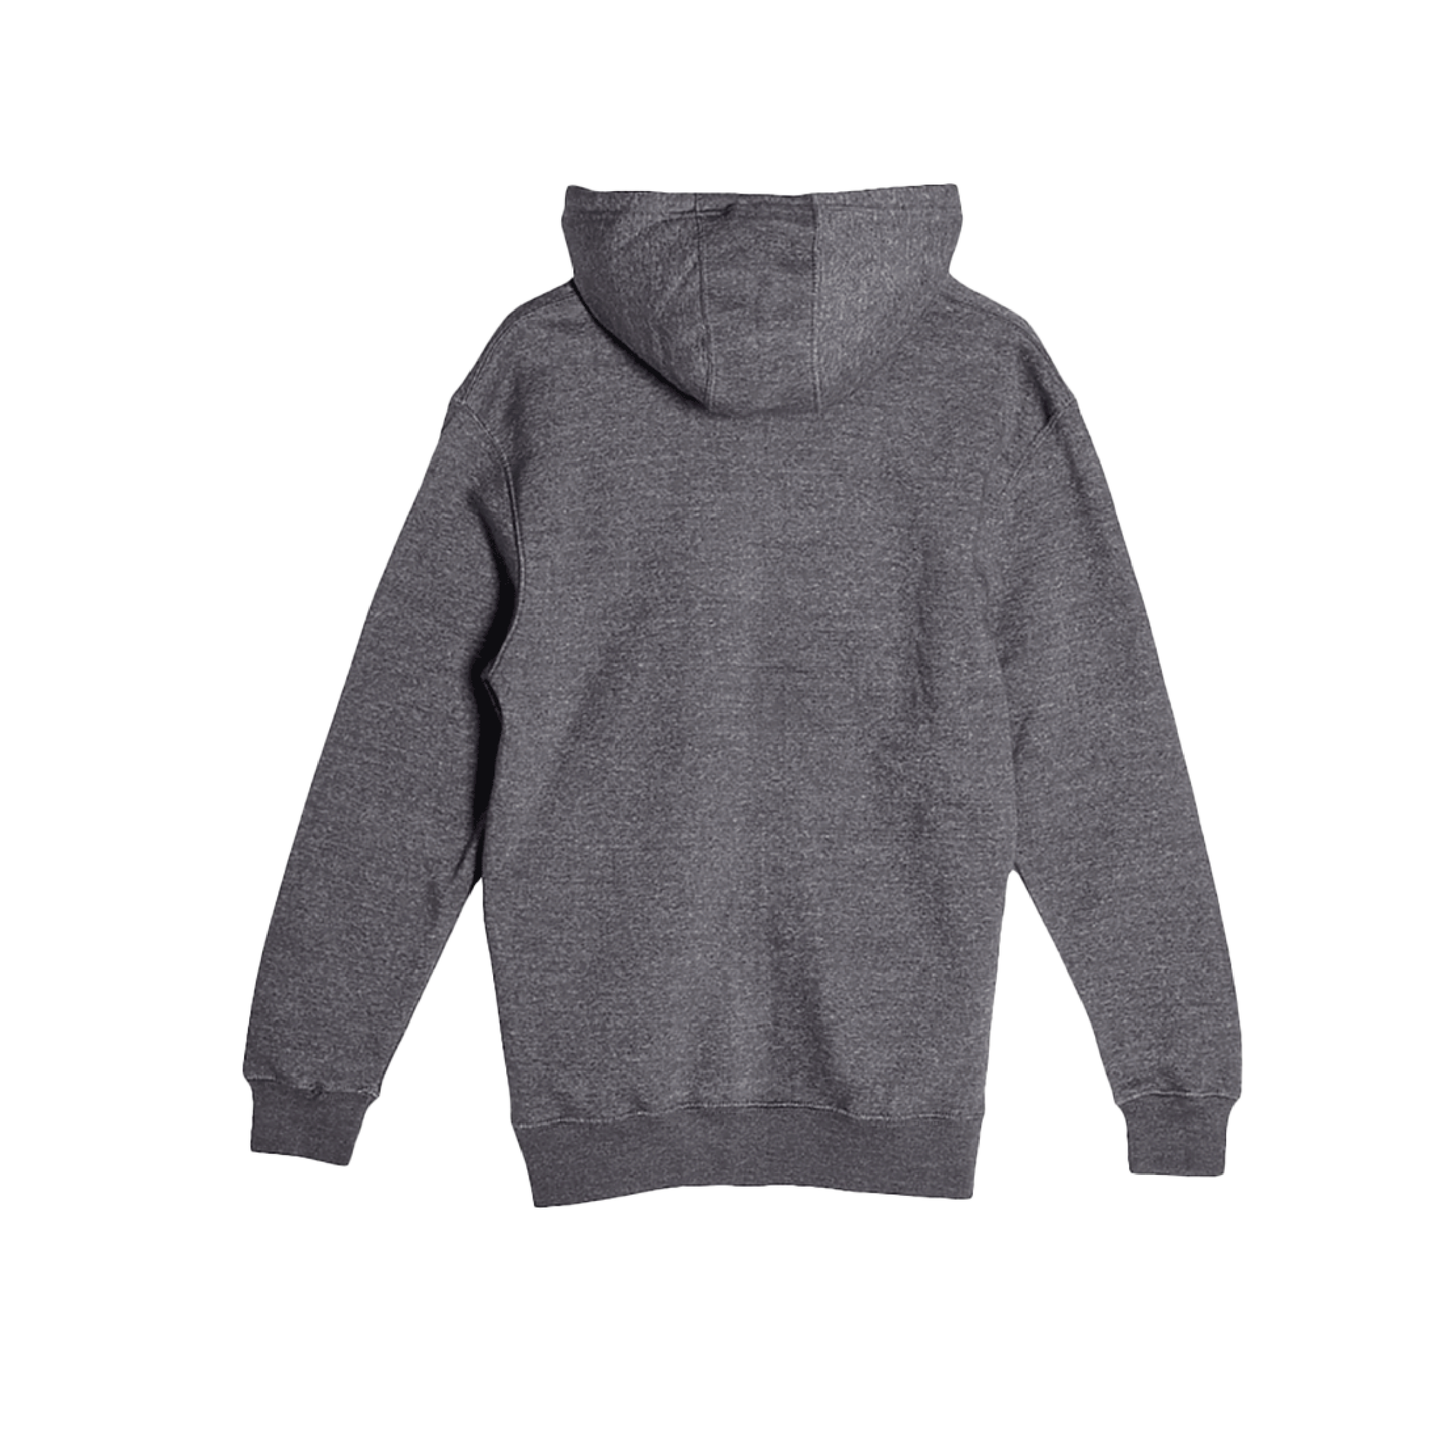 Reflection Bay Premium Unisex Hooded Zip Sweatshirt